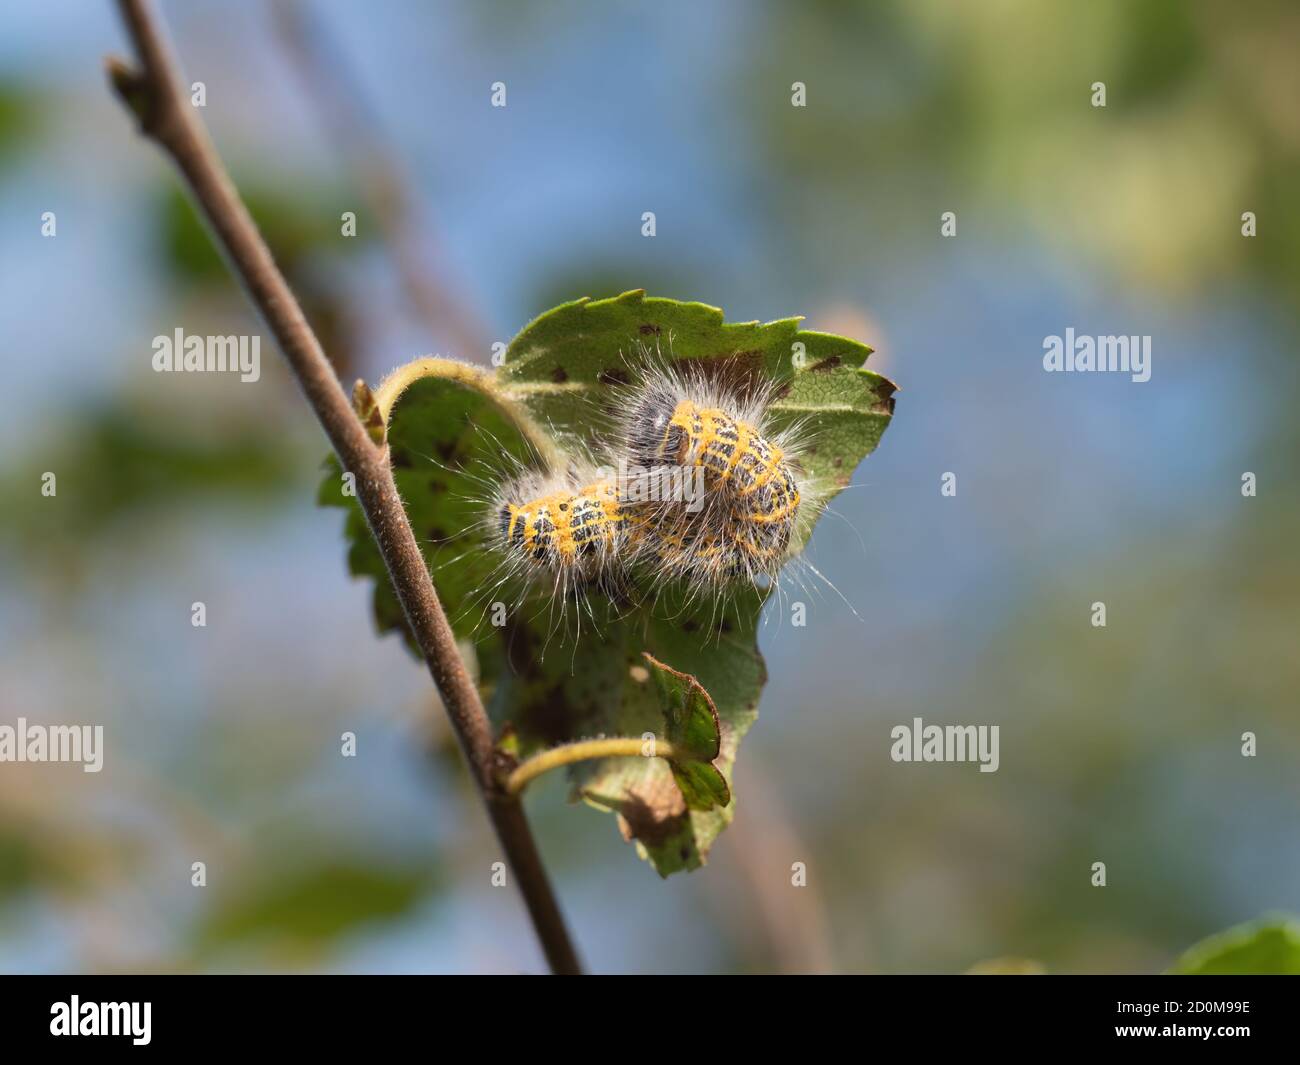 Caterpillar of Buff tip moth, on leaf underside. UK. Stock Photo